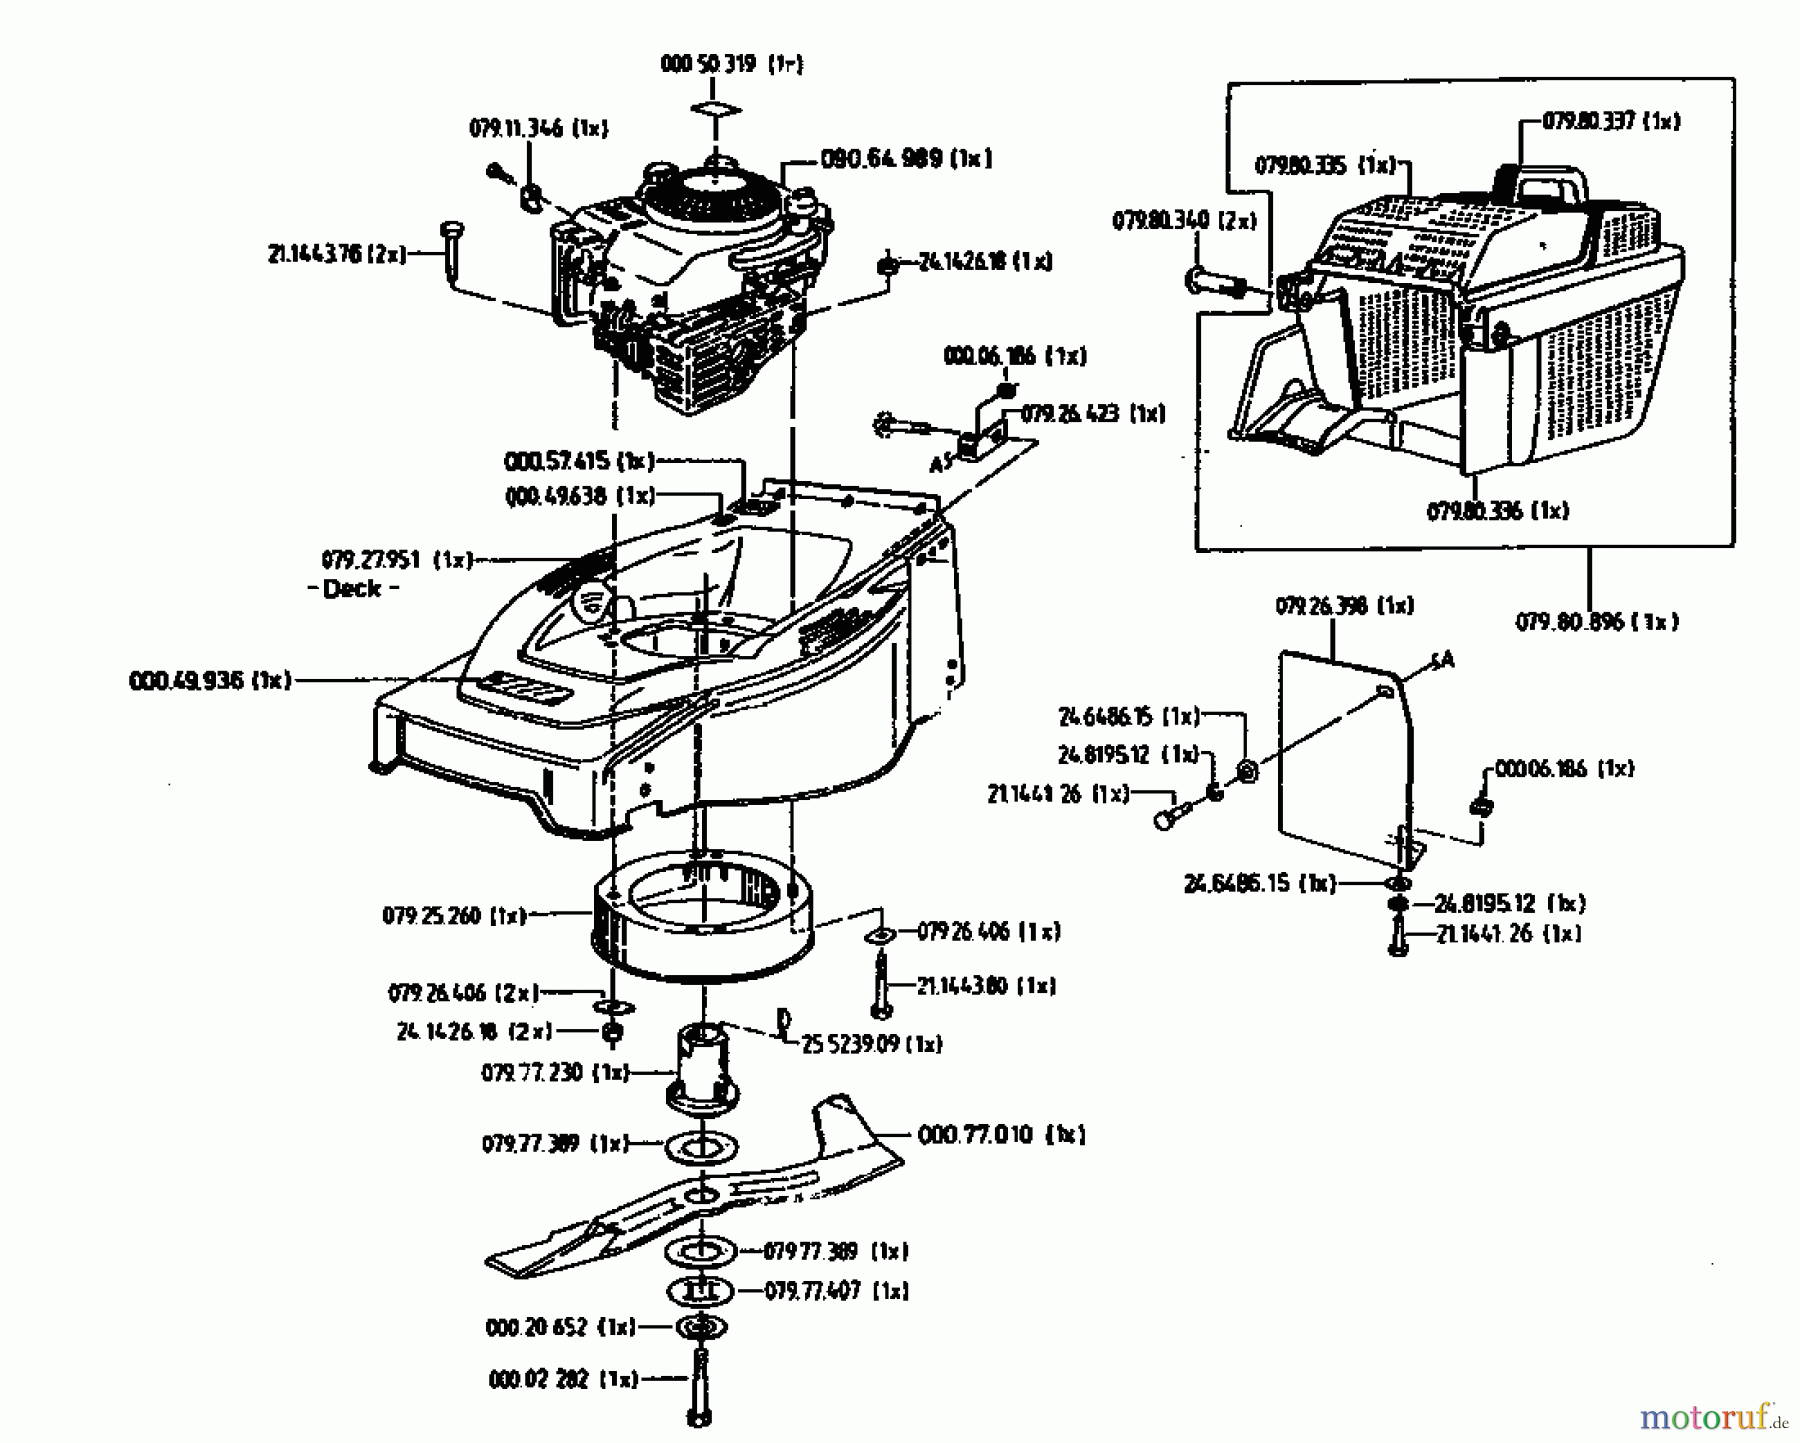  Gutbrod Petrol mower HB 48 02814.08  (1996) Basic machine